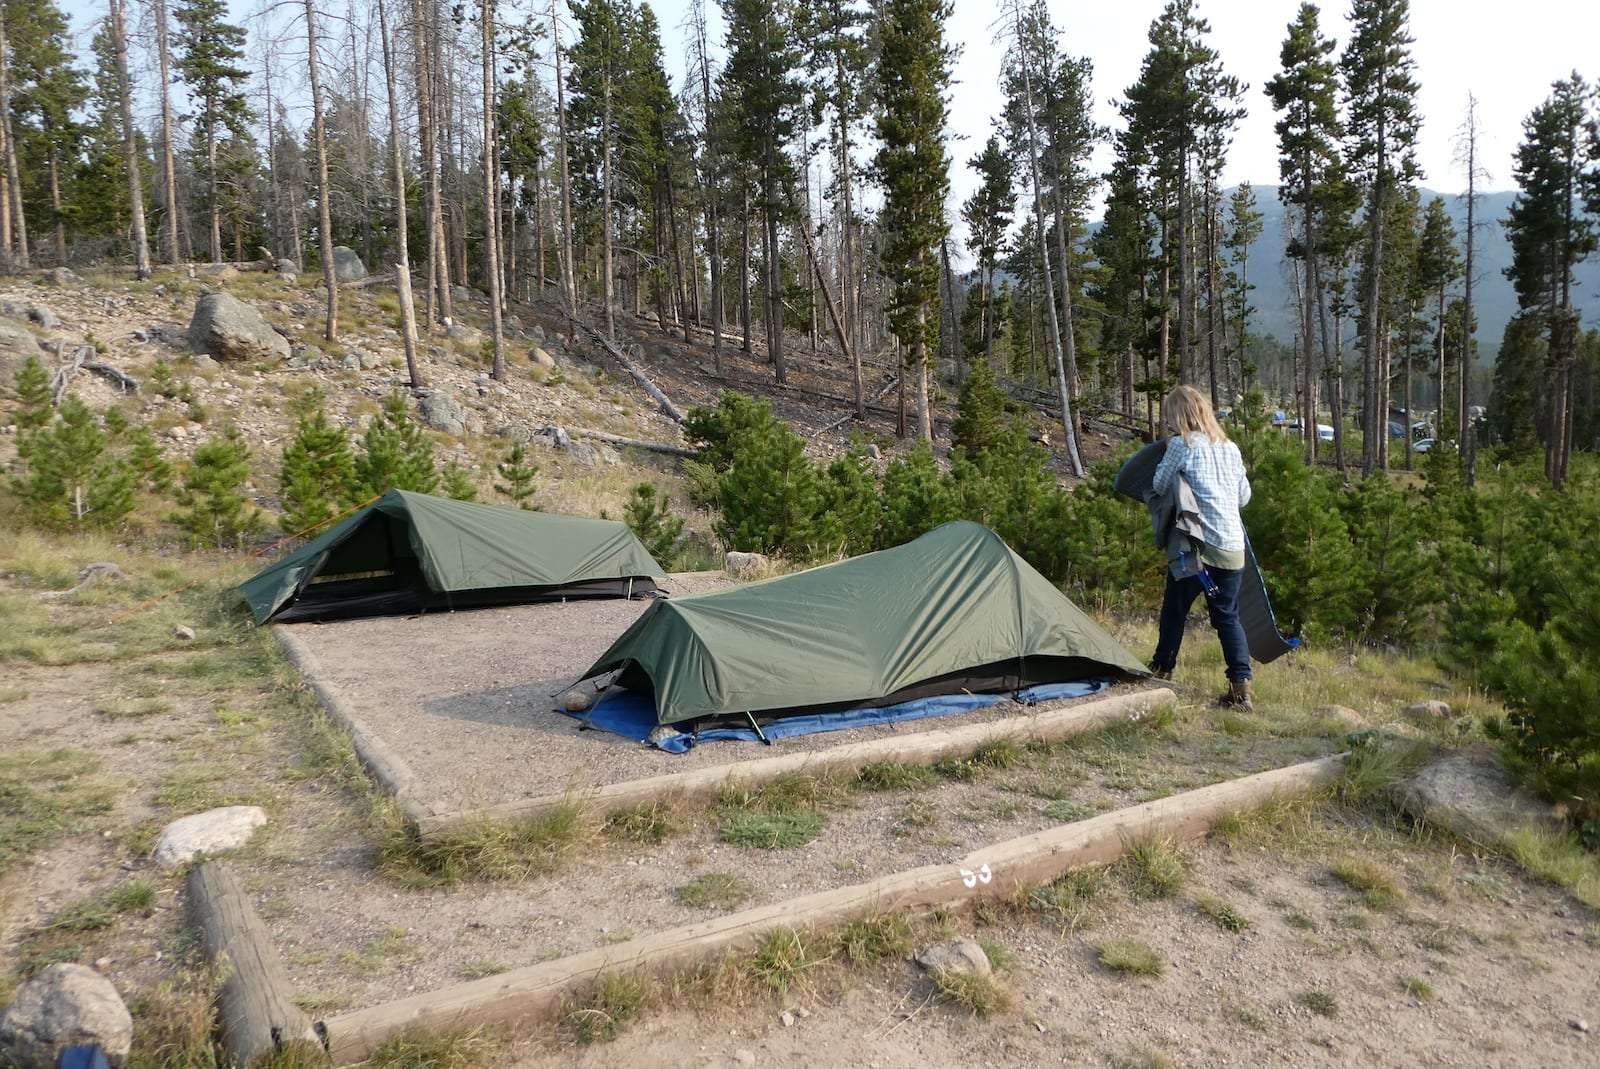 Camping near Estes Park, around Rocky Mountain National Park